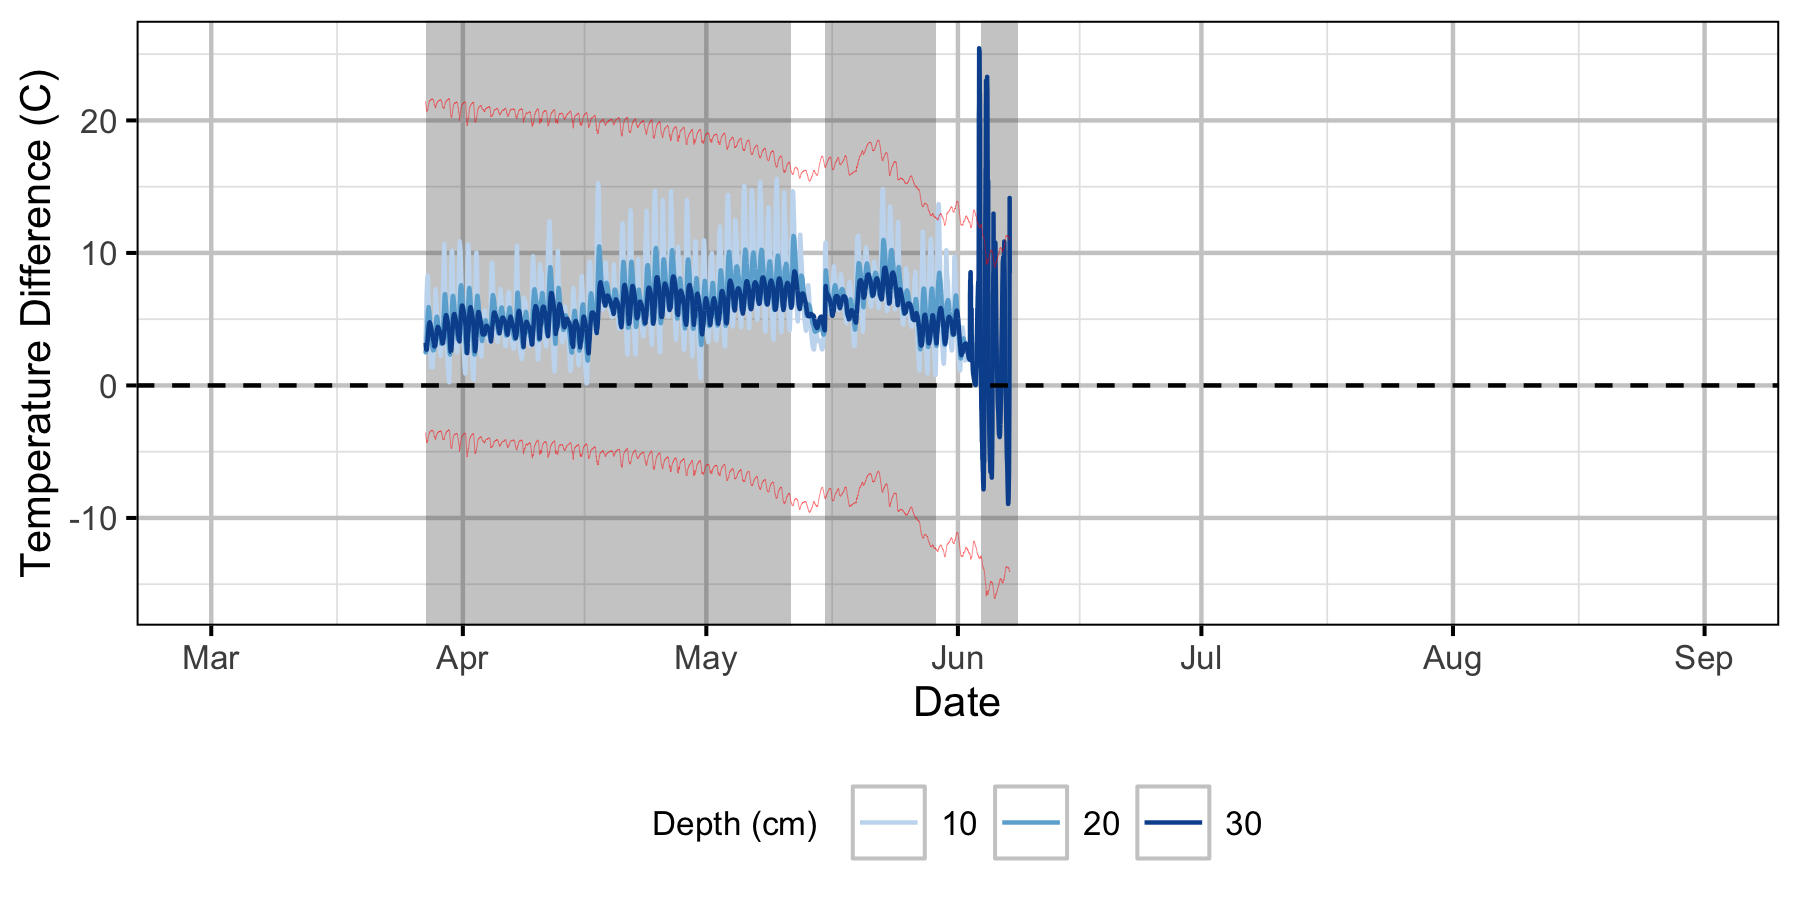 figures/Sensor Data/Relative Gravel Temperature Stations/Norns Creek Fan/Station10.png